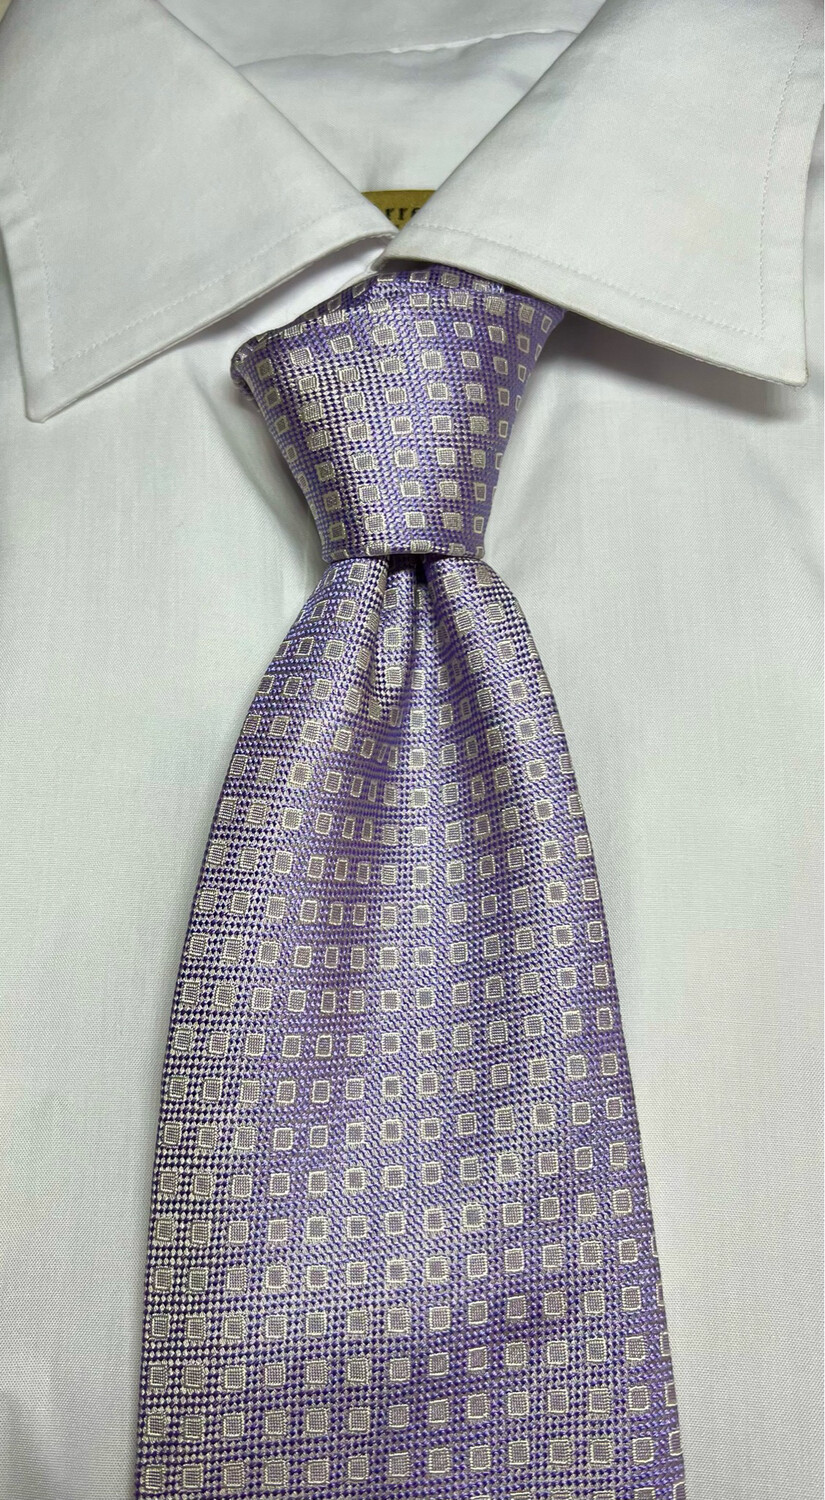 Cravatta Belmonte seta 100% lilla microfantasia silk necktie